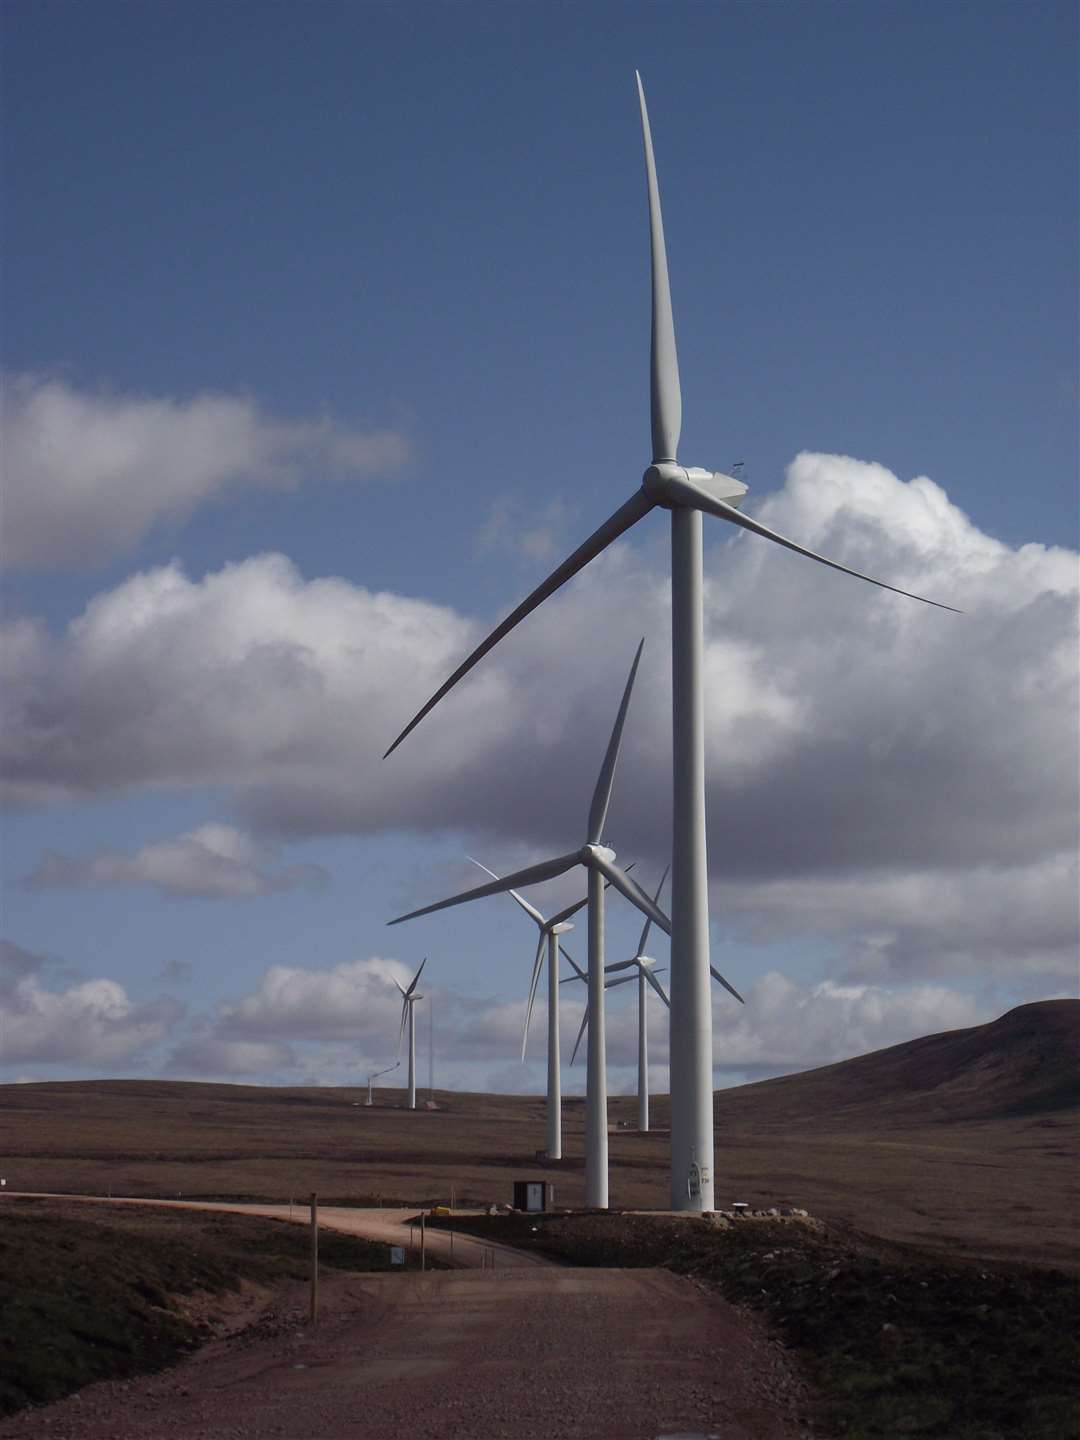 Gordonbush wind farm in Sutherland has received more than £19 million.